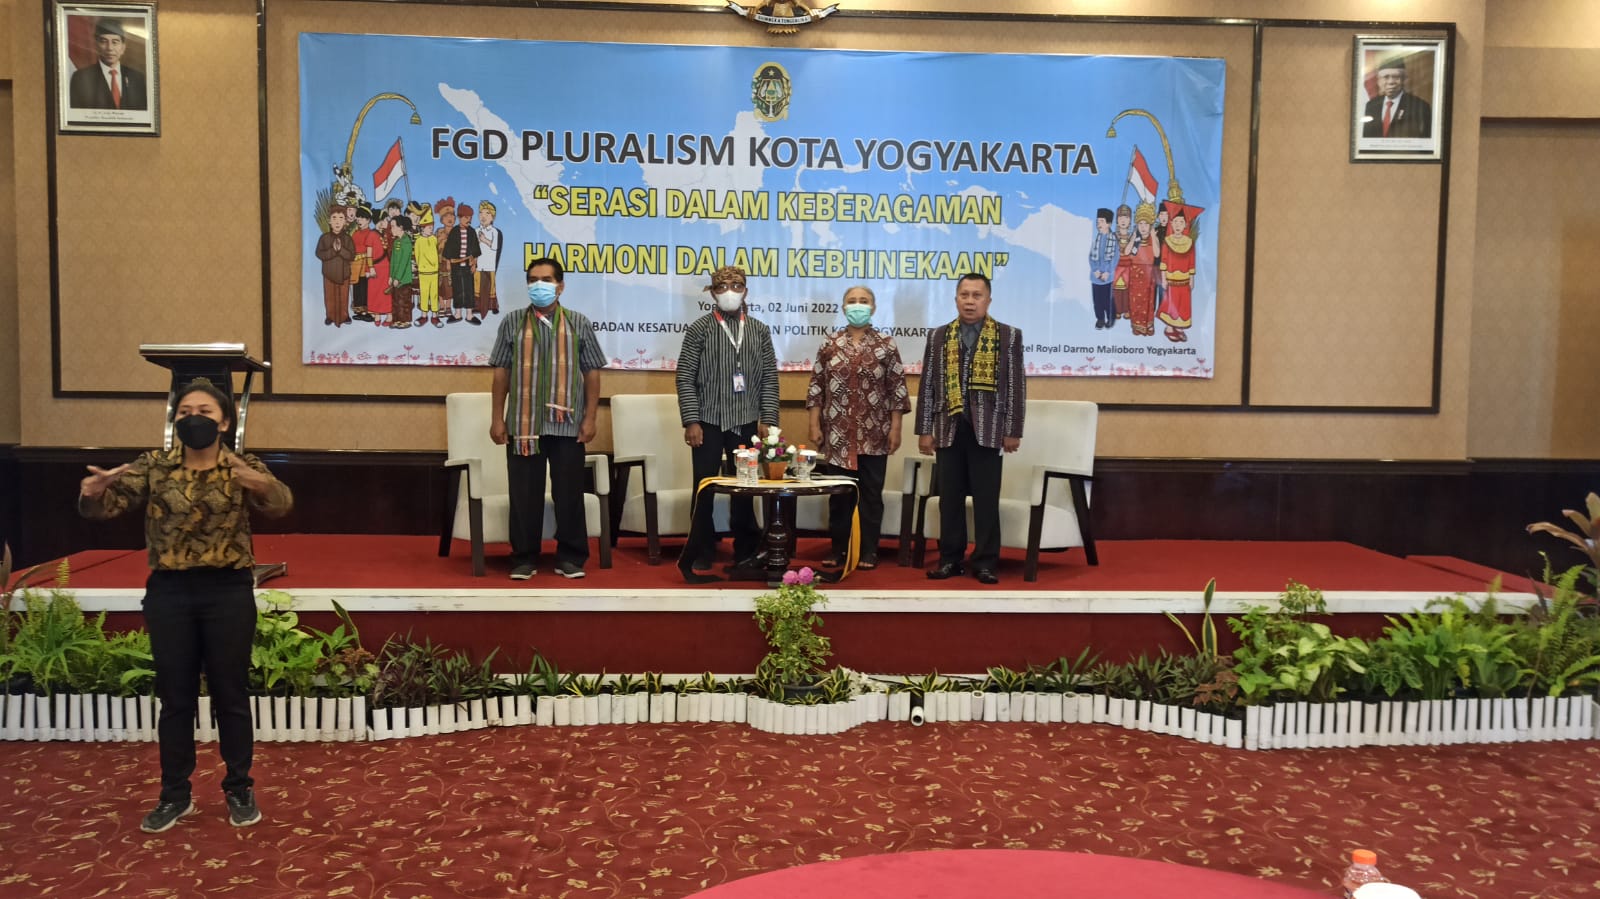 FGD Pluralism Kota Yogyakarta